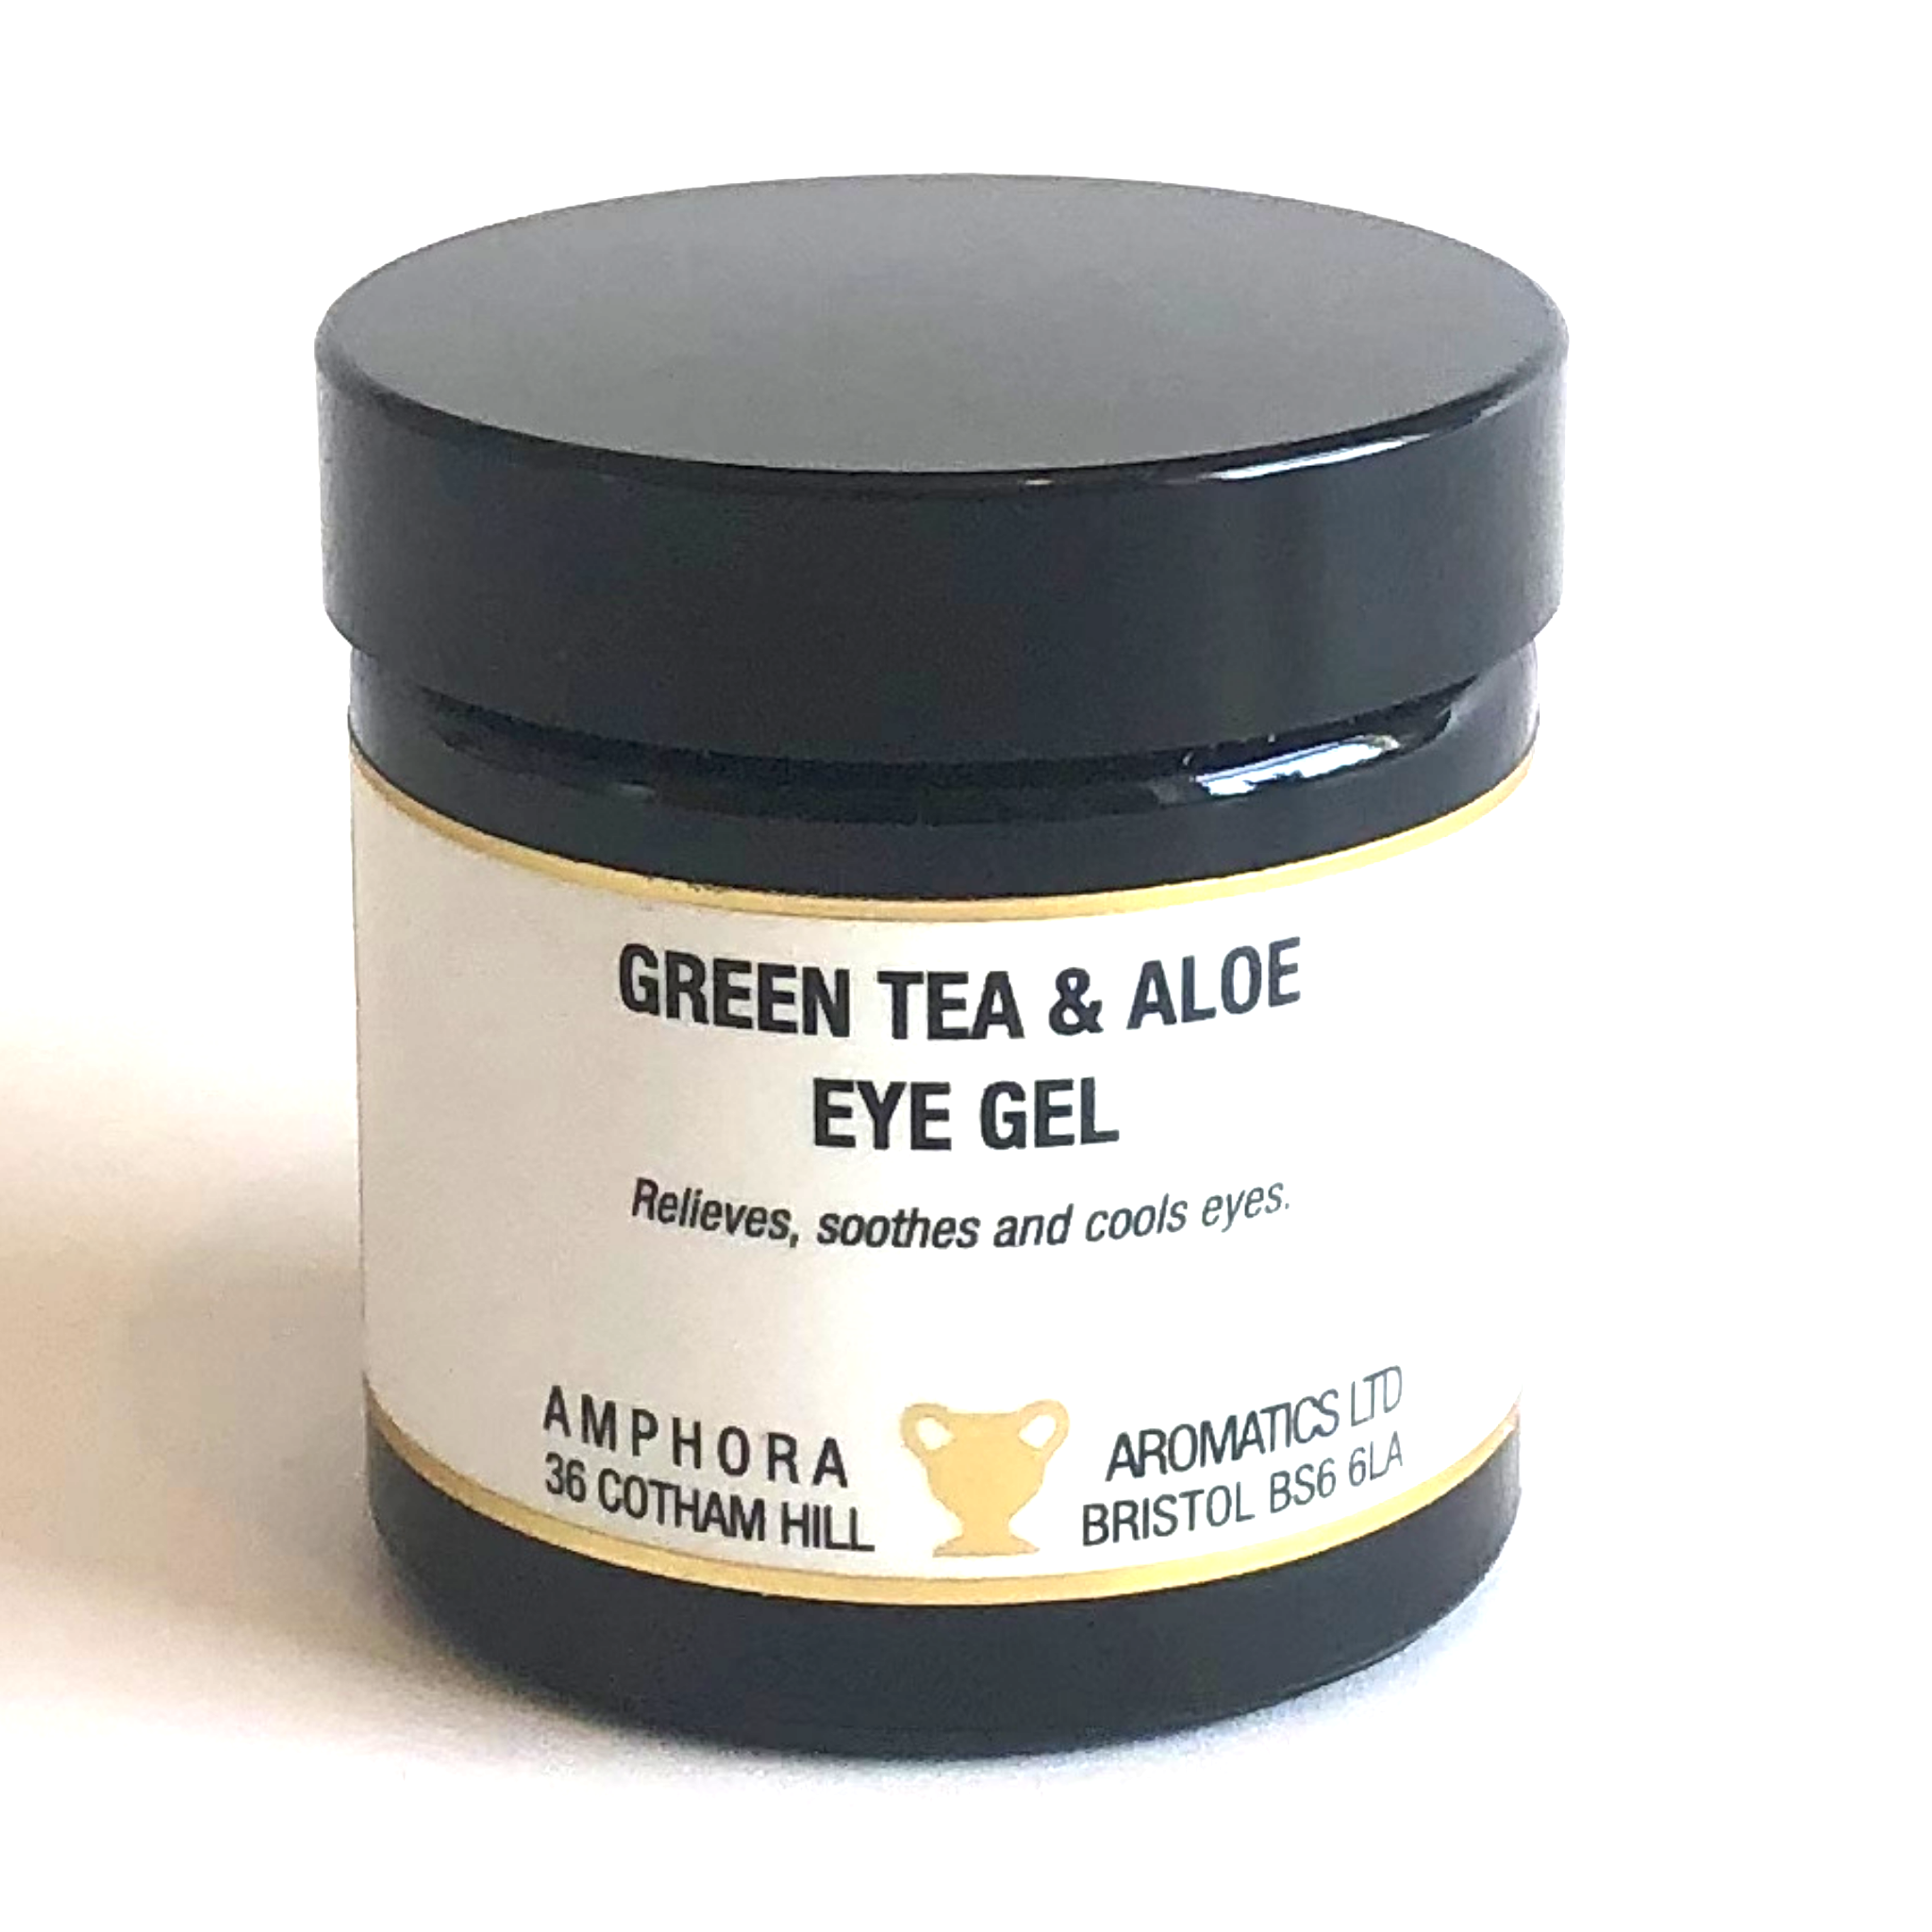 Green Tea & Aloe Eye Gel by Amphora Aromatics